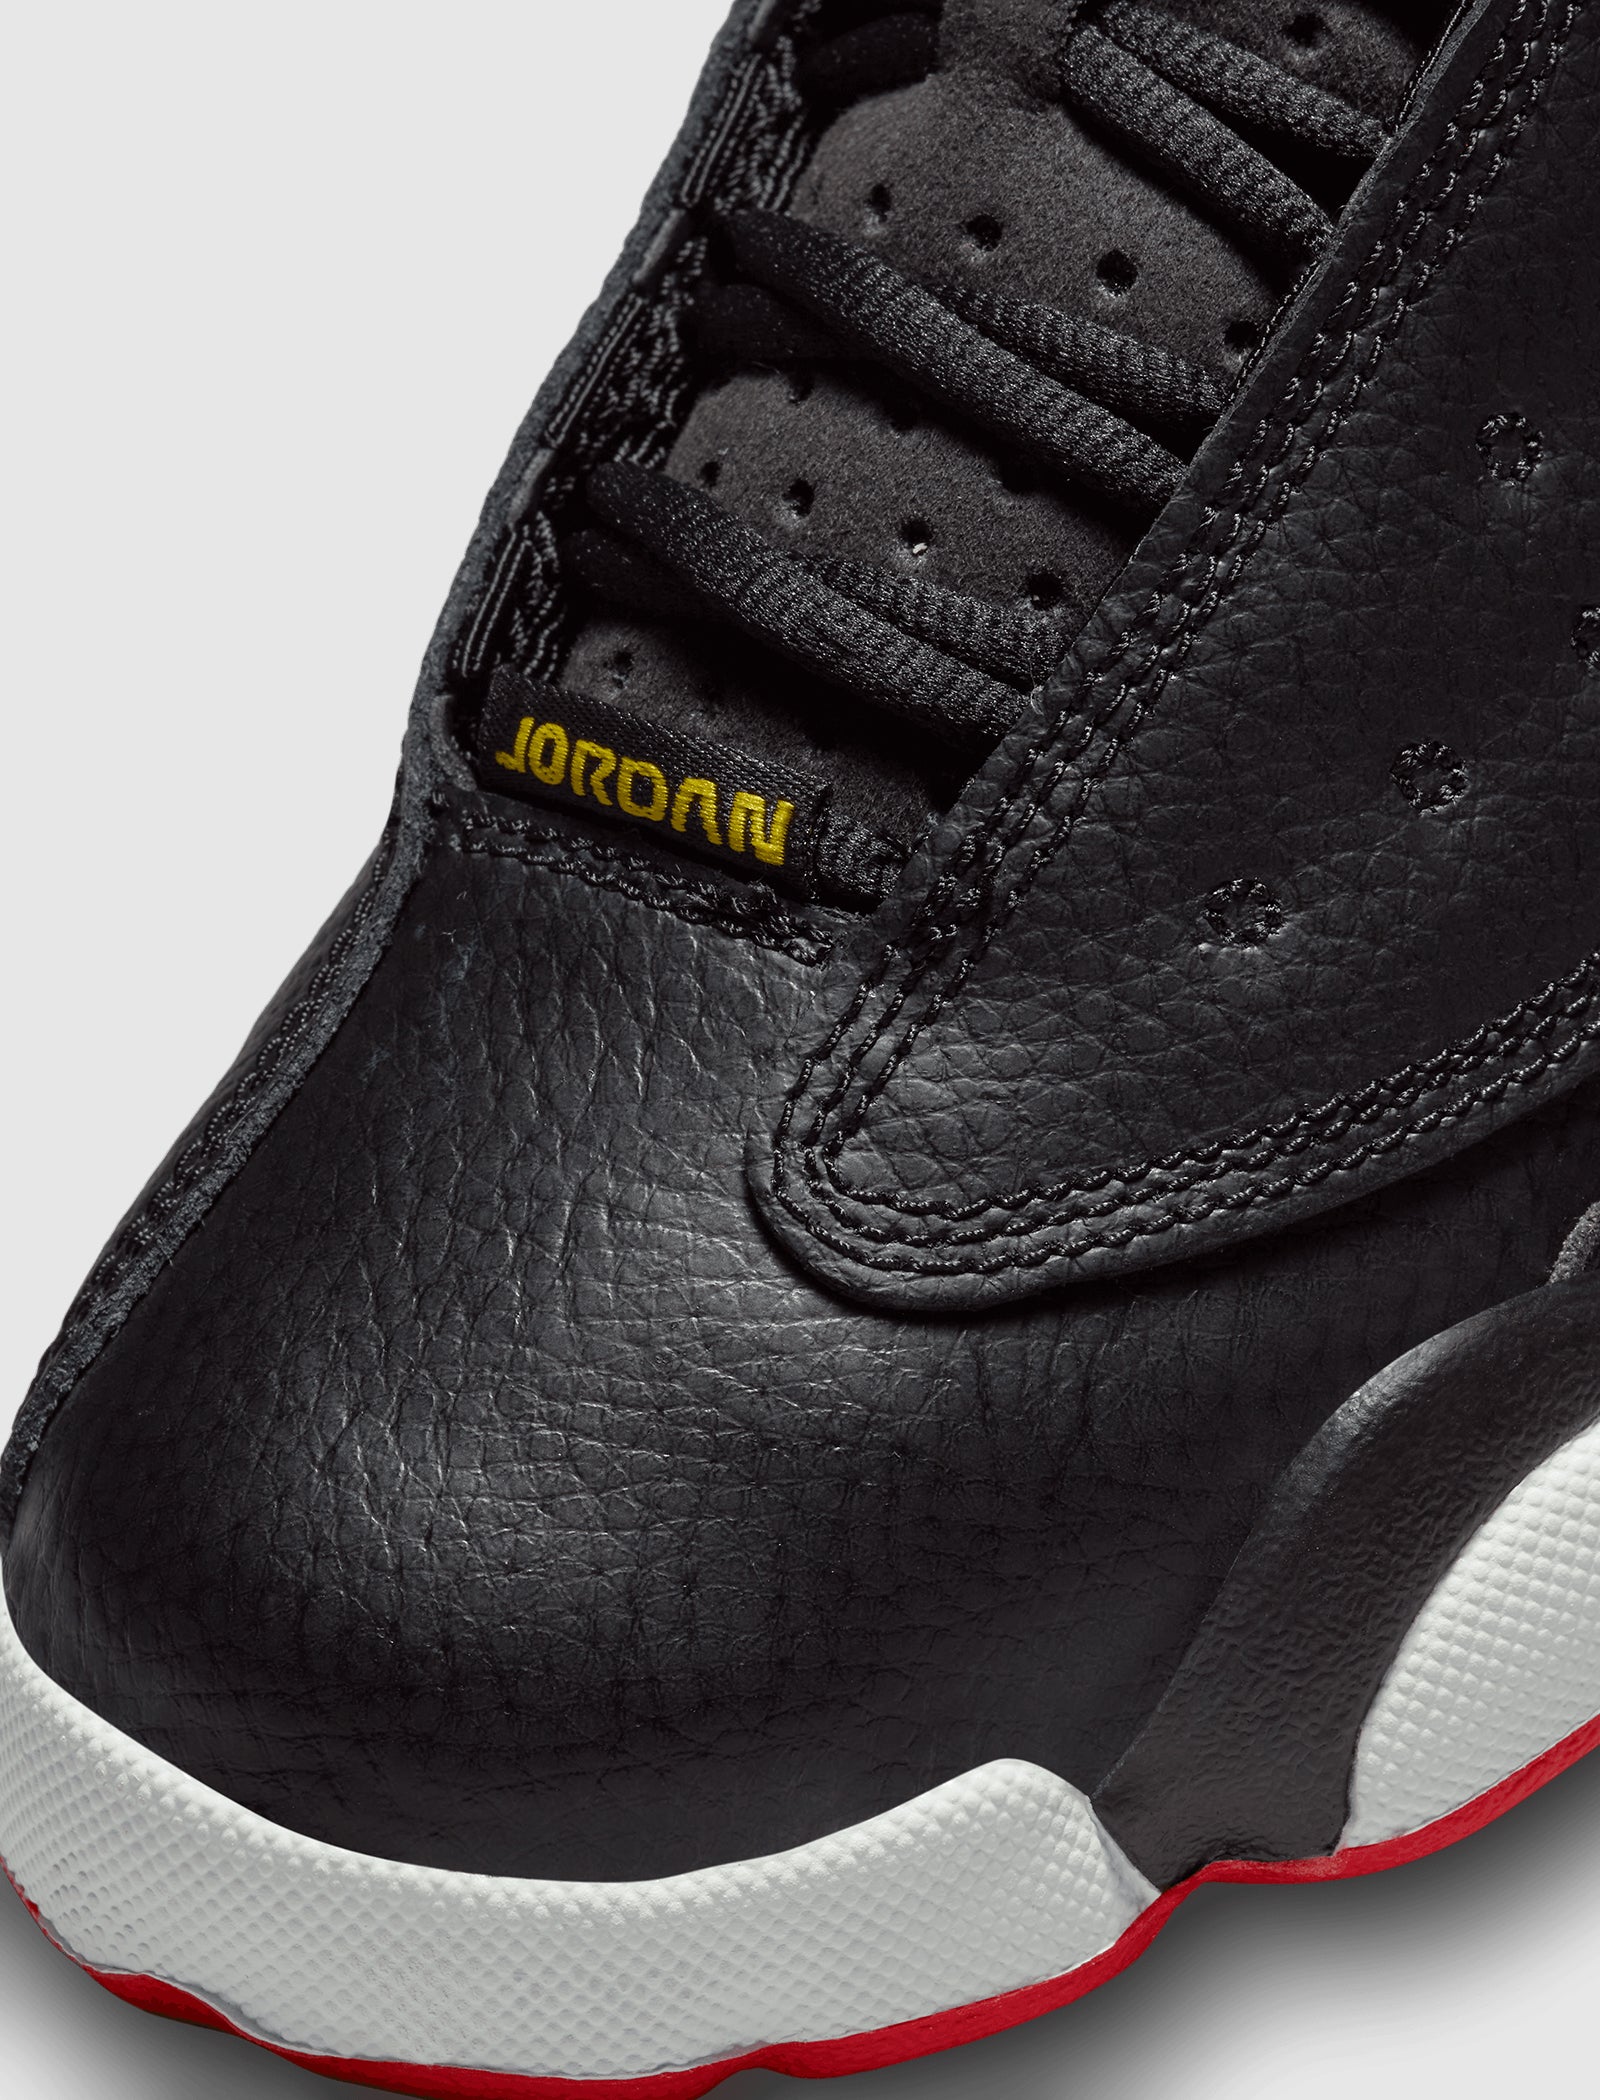 Air Jordan 13 Retro PS Playoffs Shoes